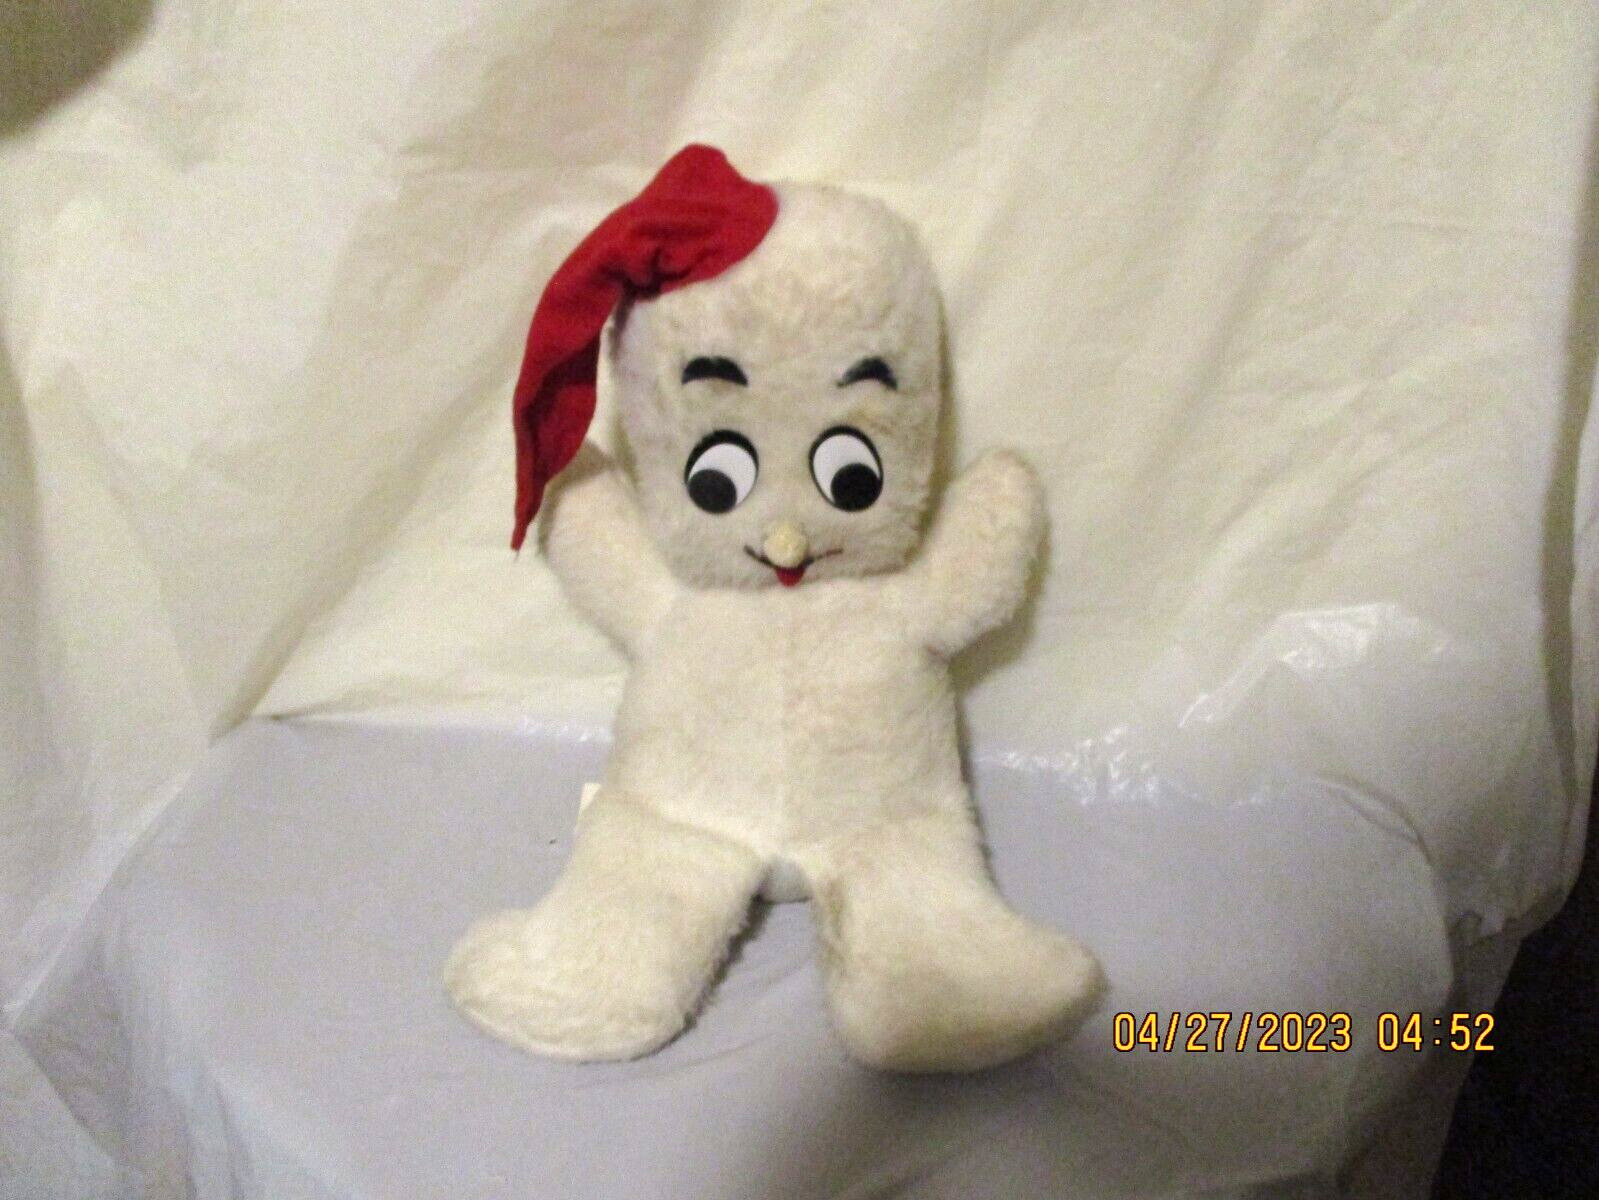 Vtg 1950s Commonwealth Toy Stuffed Plush Christmas Snowman w/Red Stocking Cap